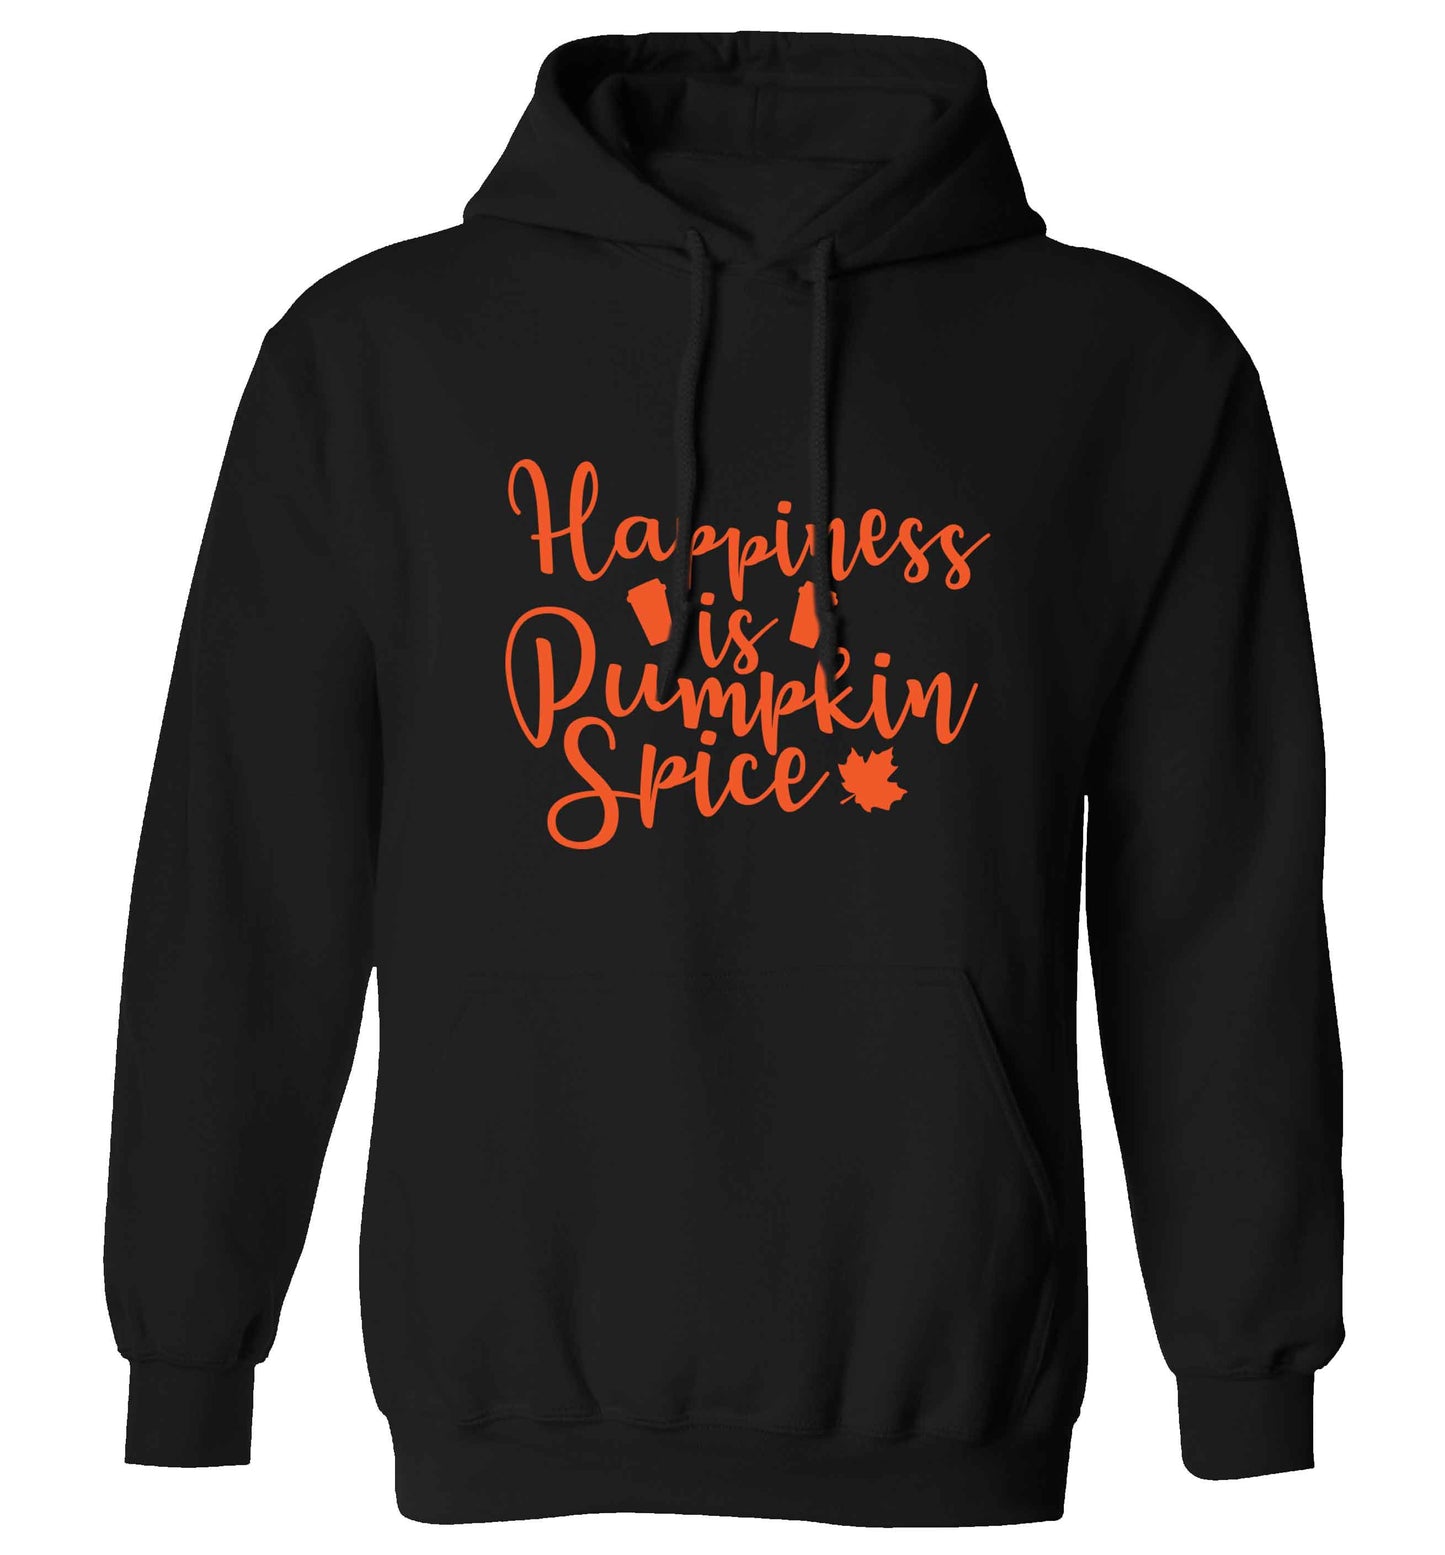 Happiness Pumpkin Spice adults unisex black hoodie 2XL